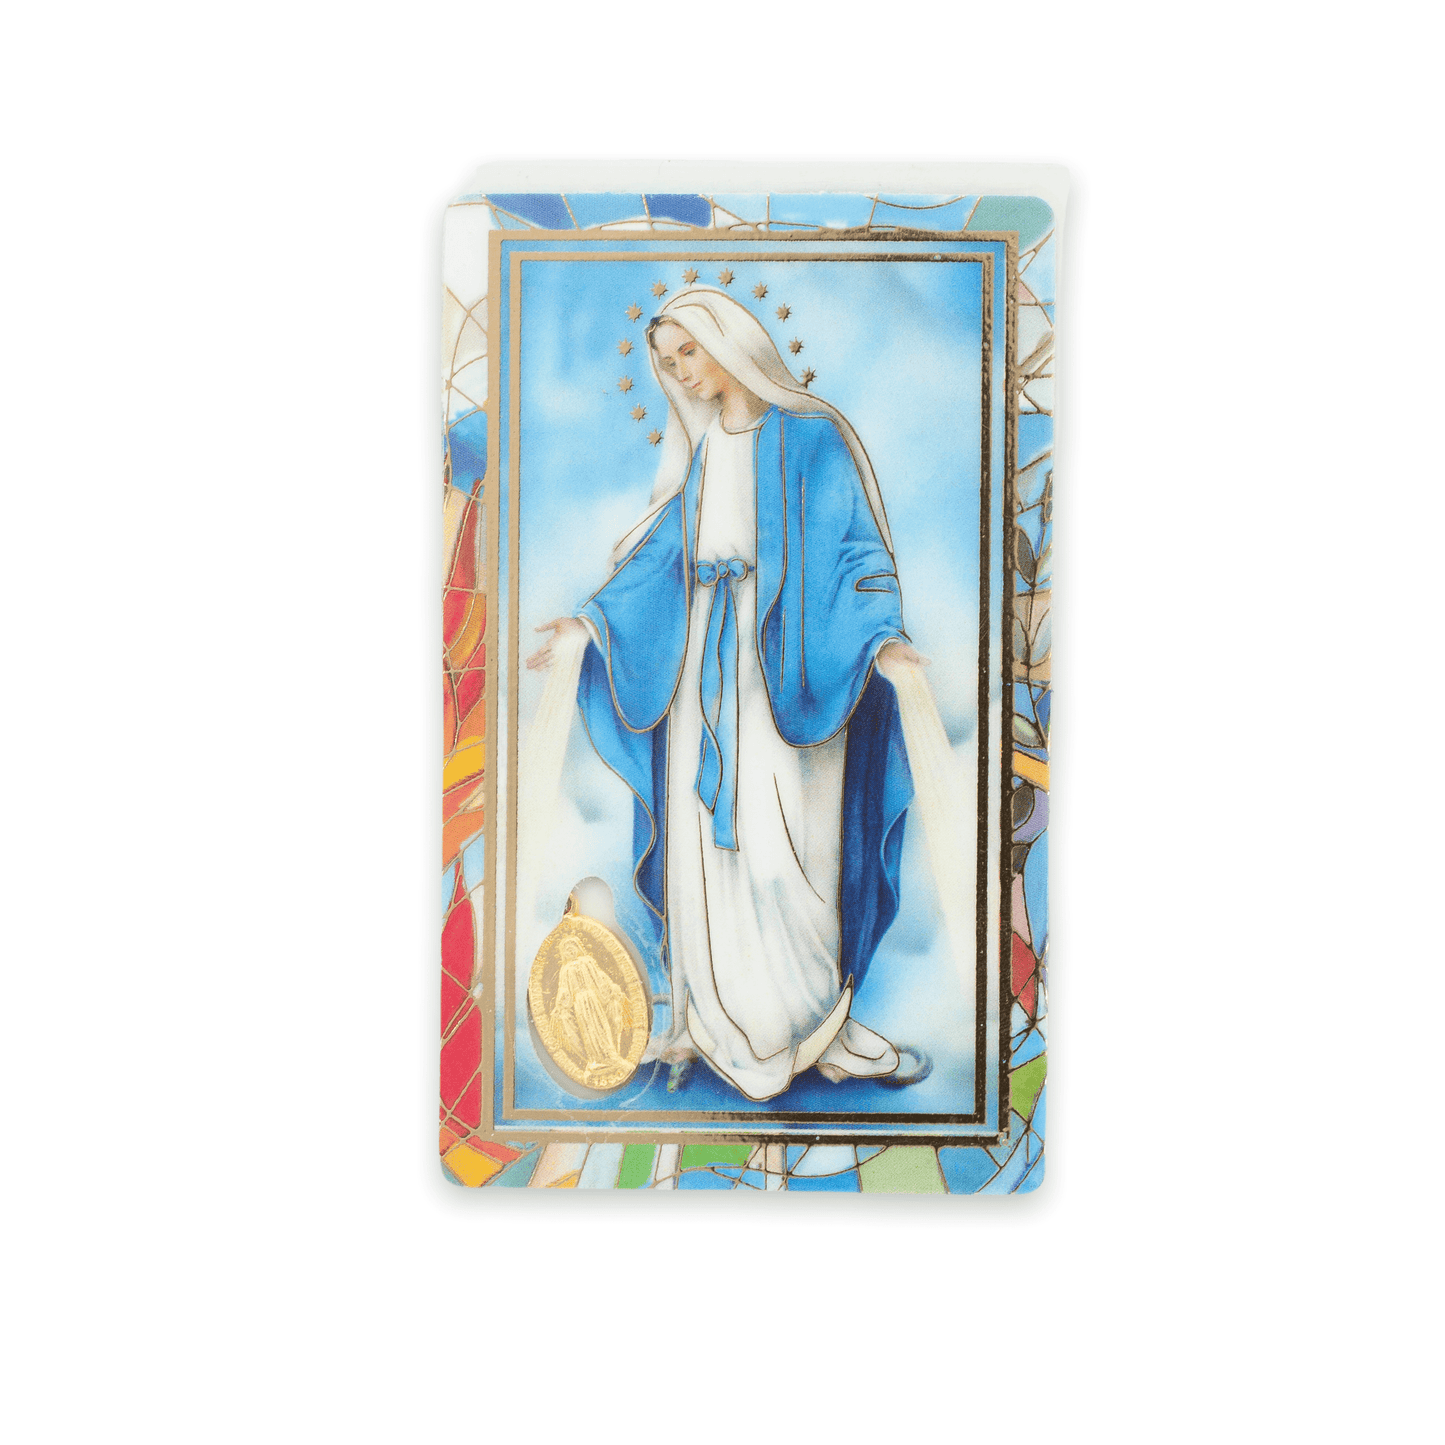 MONDO CATTOLICO Miraculous Virgin Plastified Prayer Card "May the Holy Virgin Illuminate Your Life"